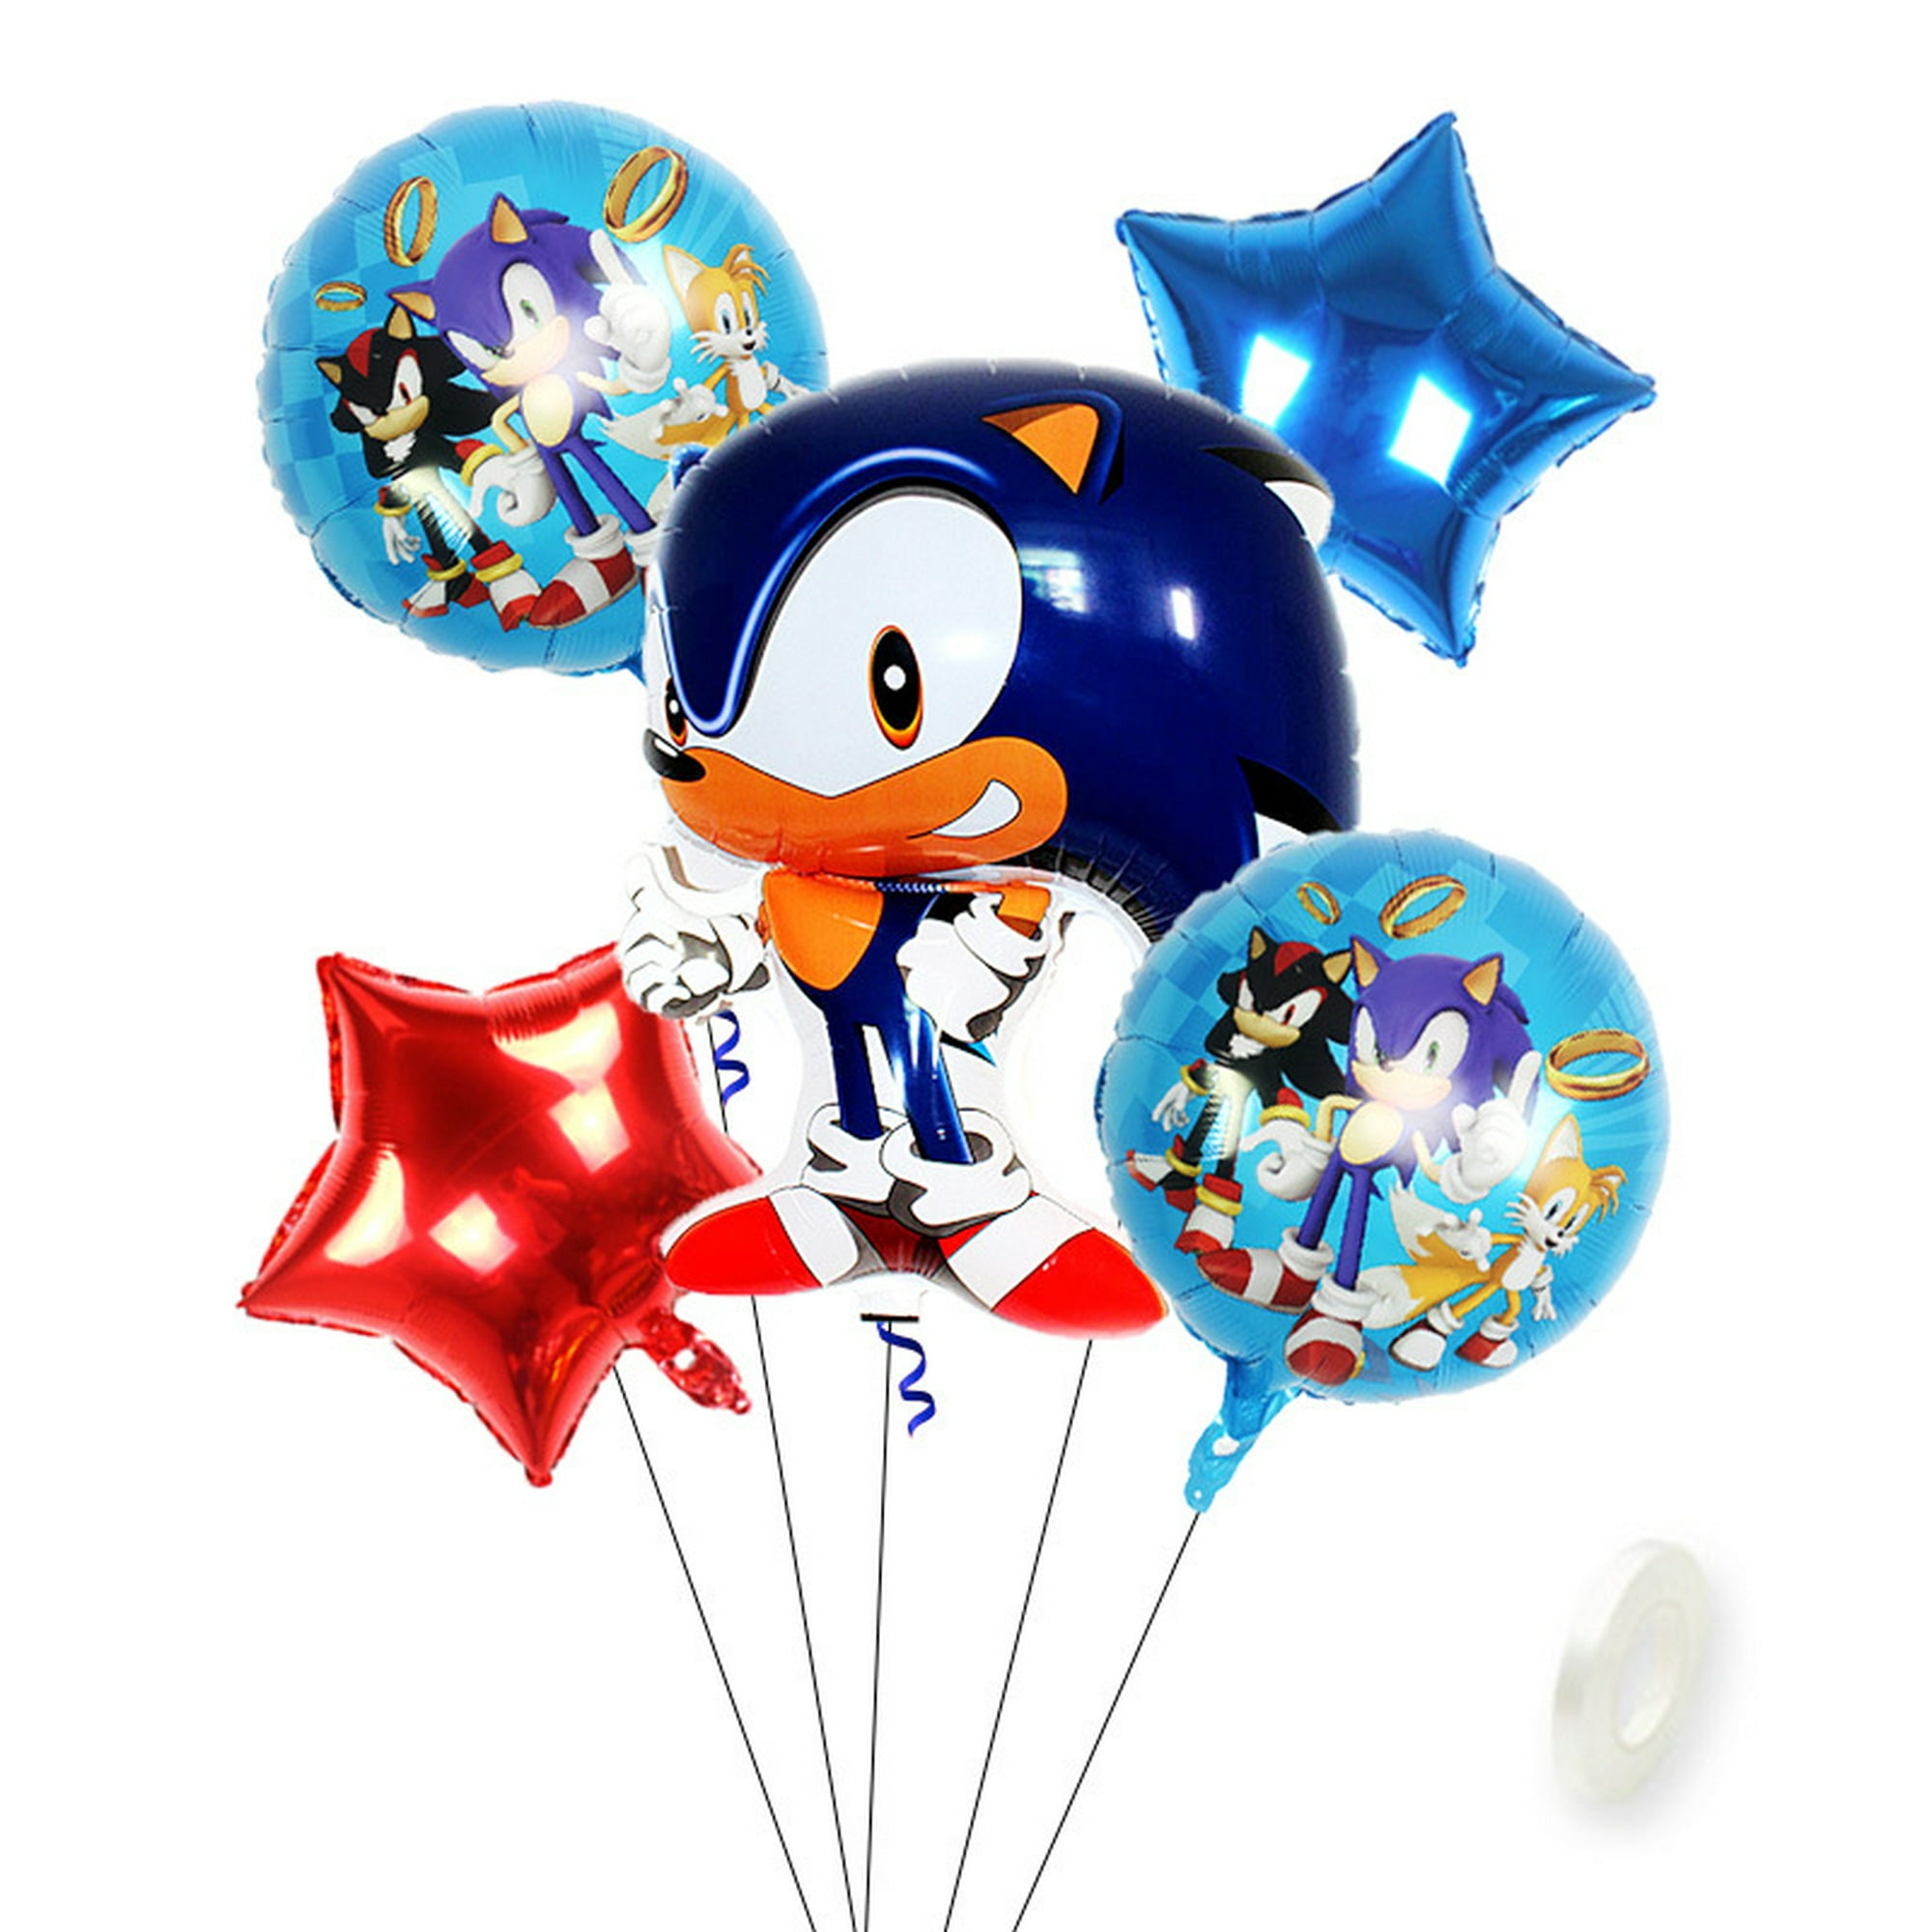 Guirnalda globos de la temática de Sonic / Sonic themed balloon garland 